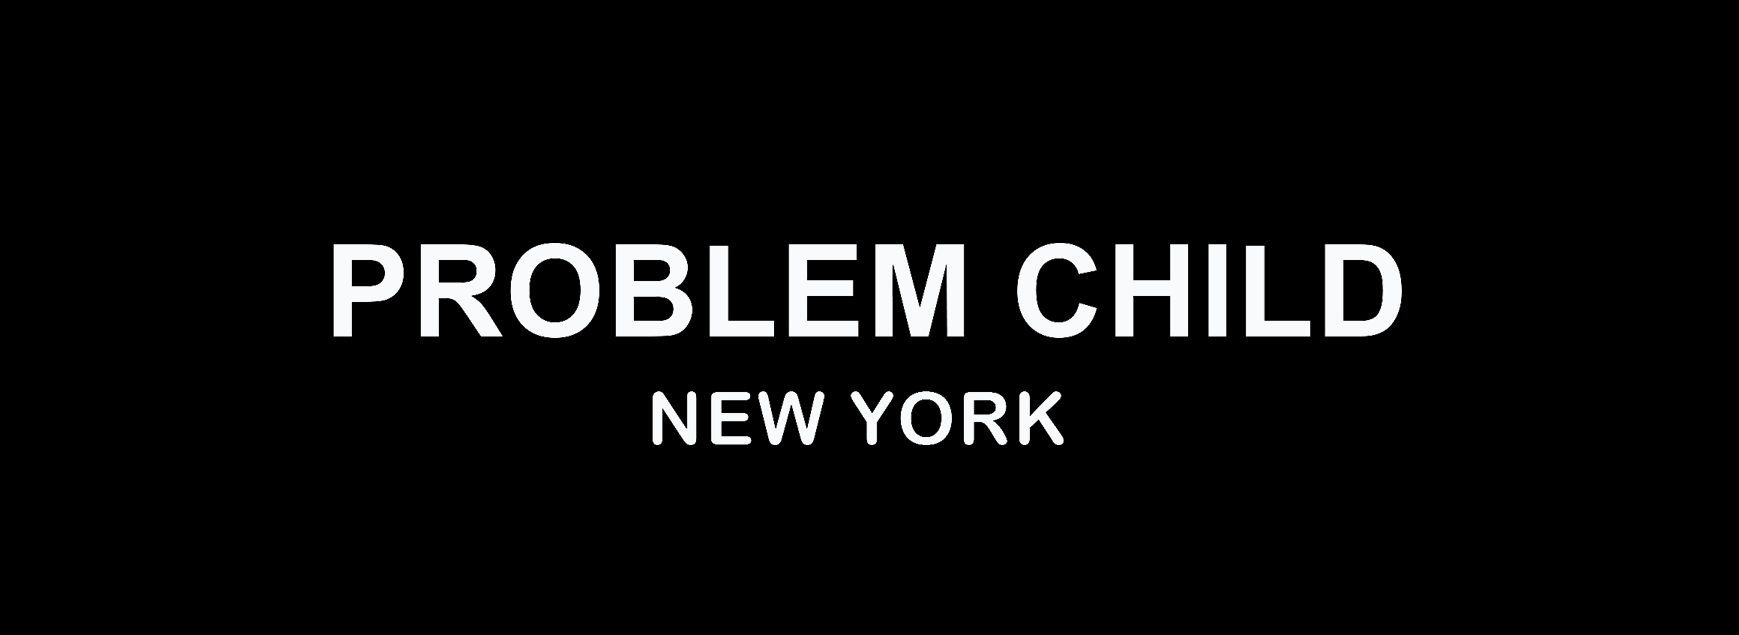 PROBLEM CHILD NEW YORK 